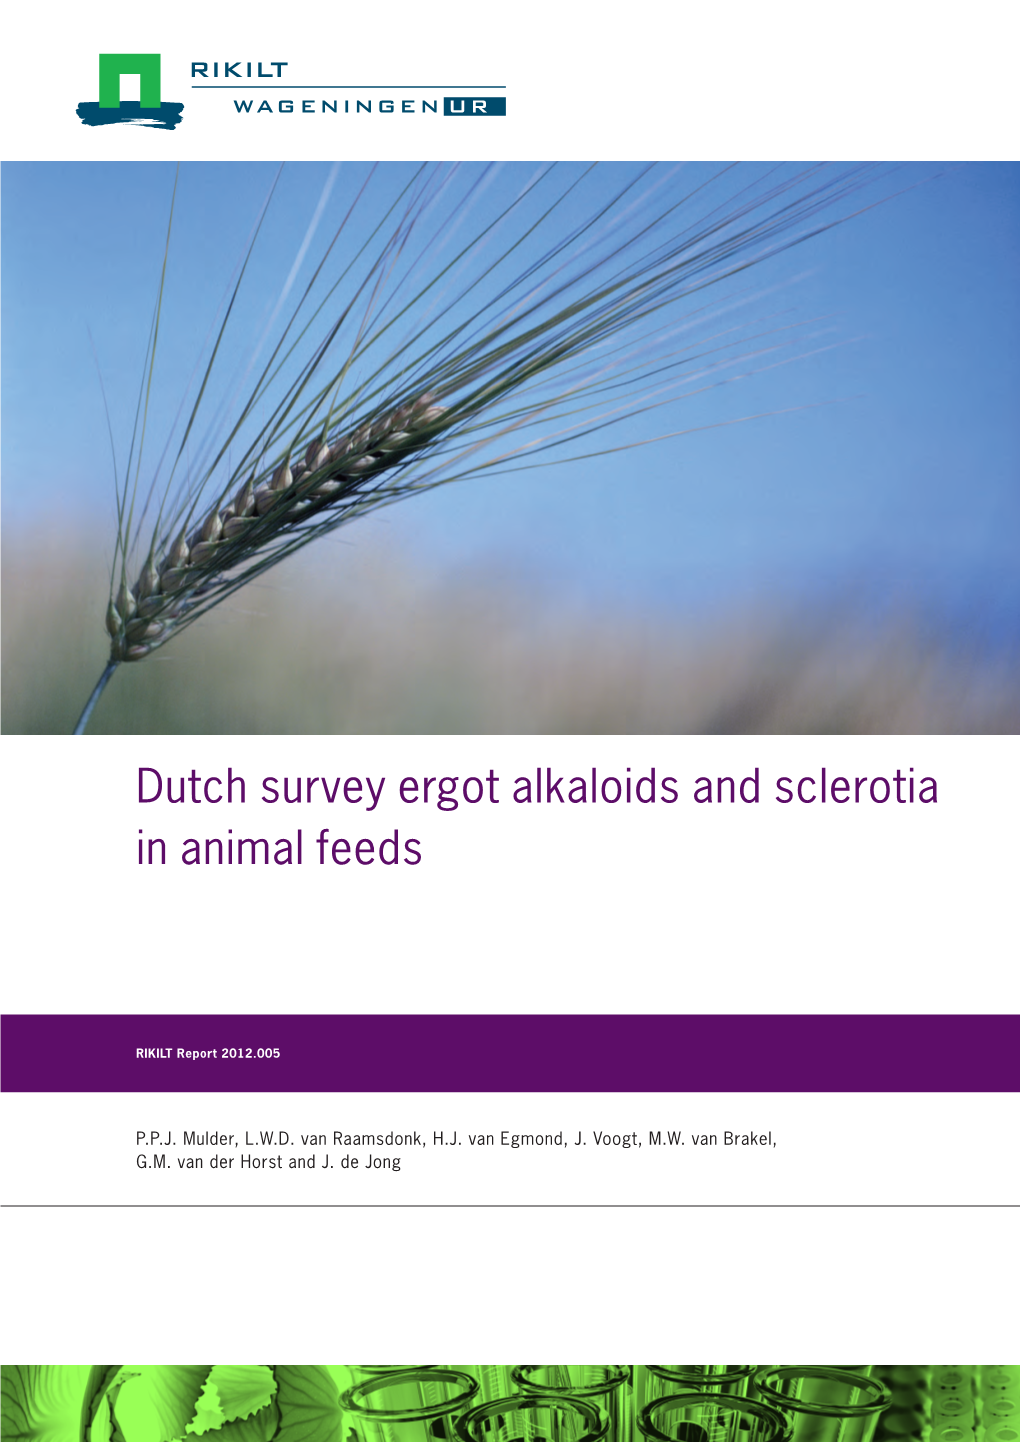 Dutch Survey Ergot Alkaloids and Sclerotia in Animal Feeds